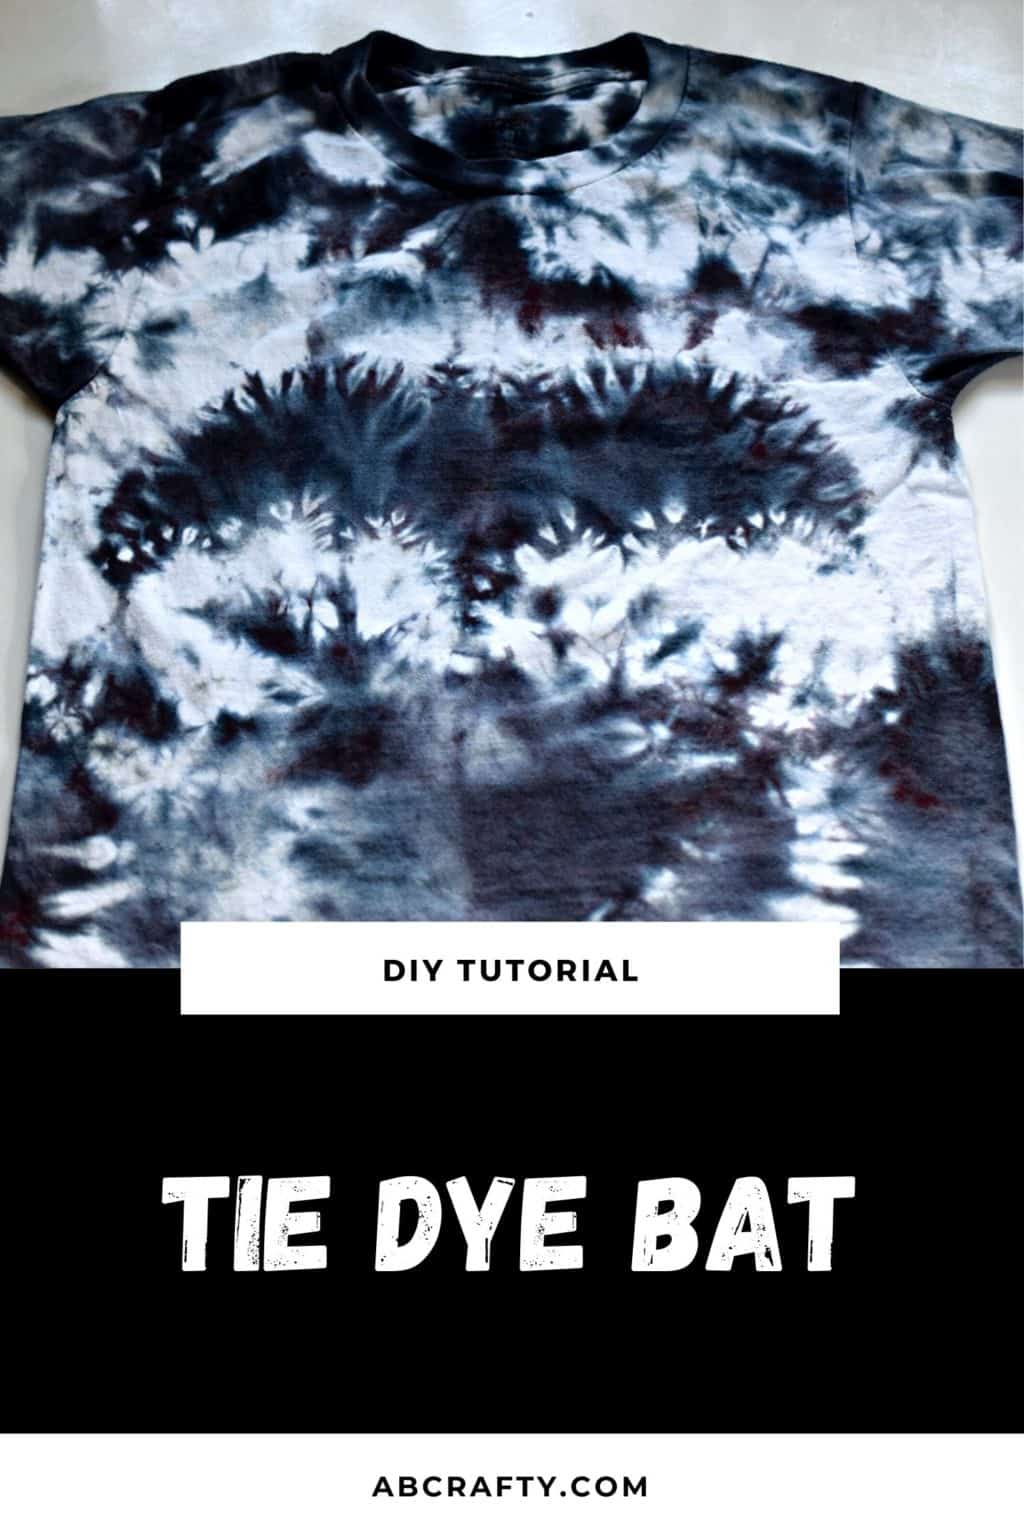 black bat tie dye shirt with the title "diy tutorial - tie dye bat"